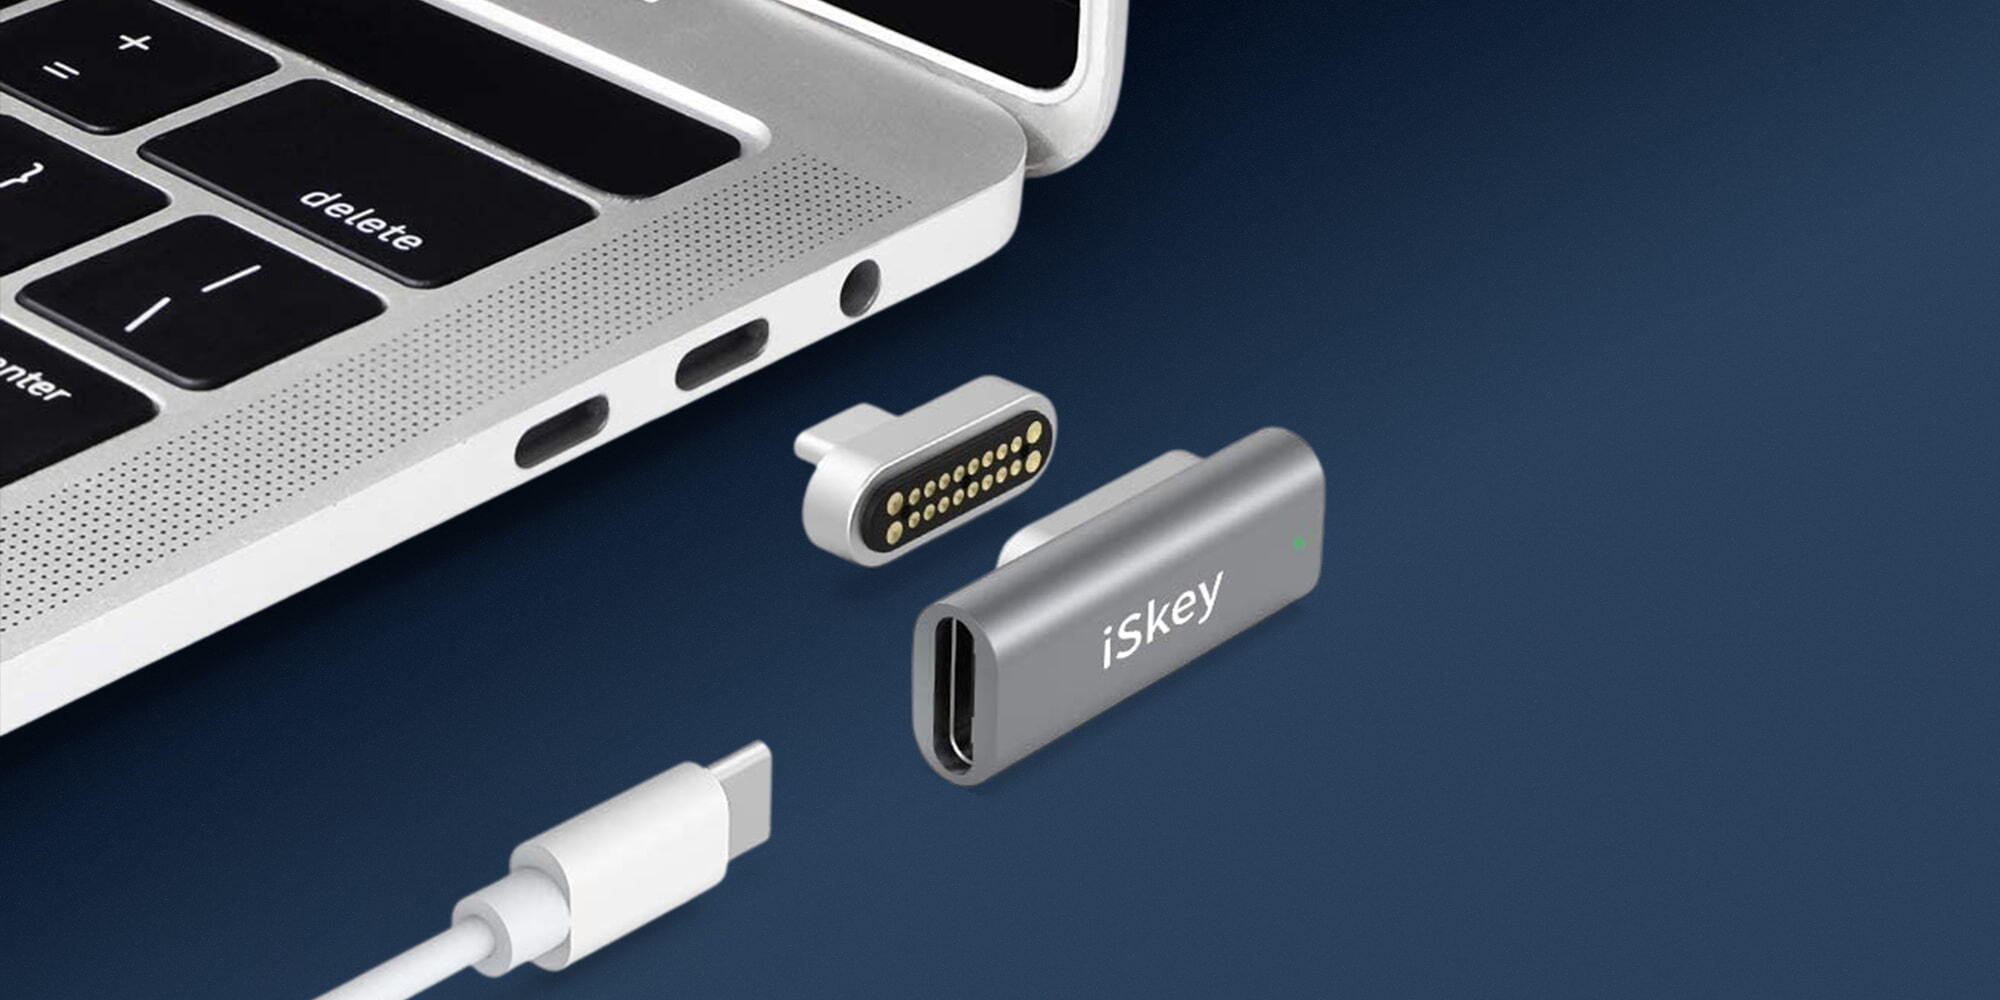 Add MagSafe to any USB-C MacBook or iPad - 9to5Mac